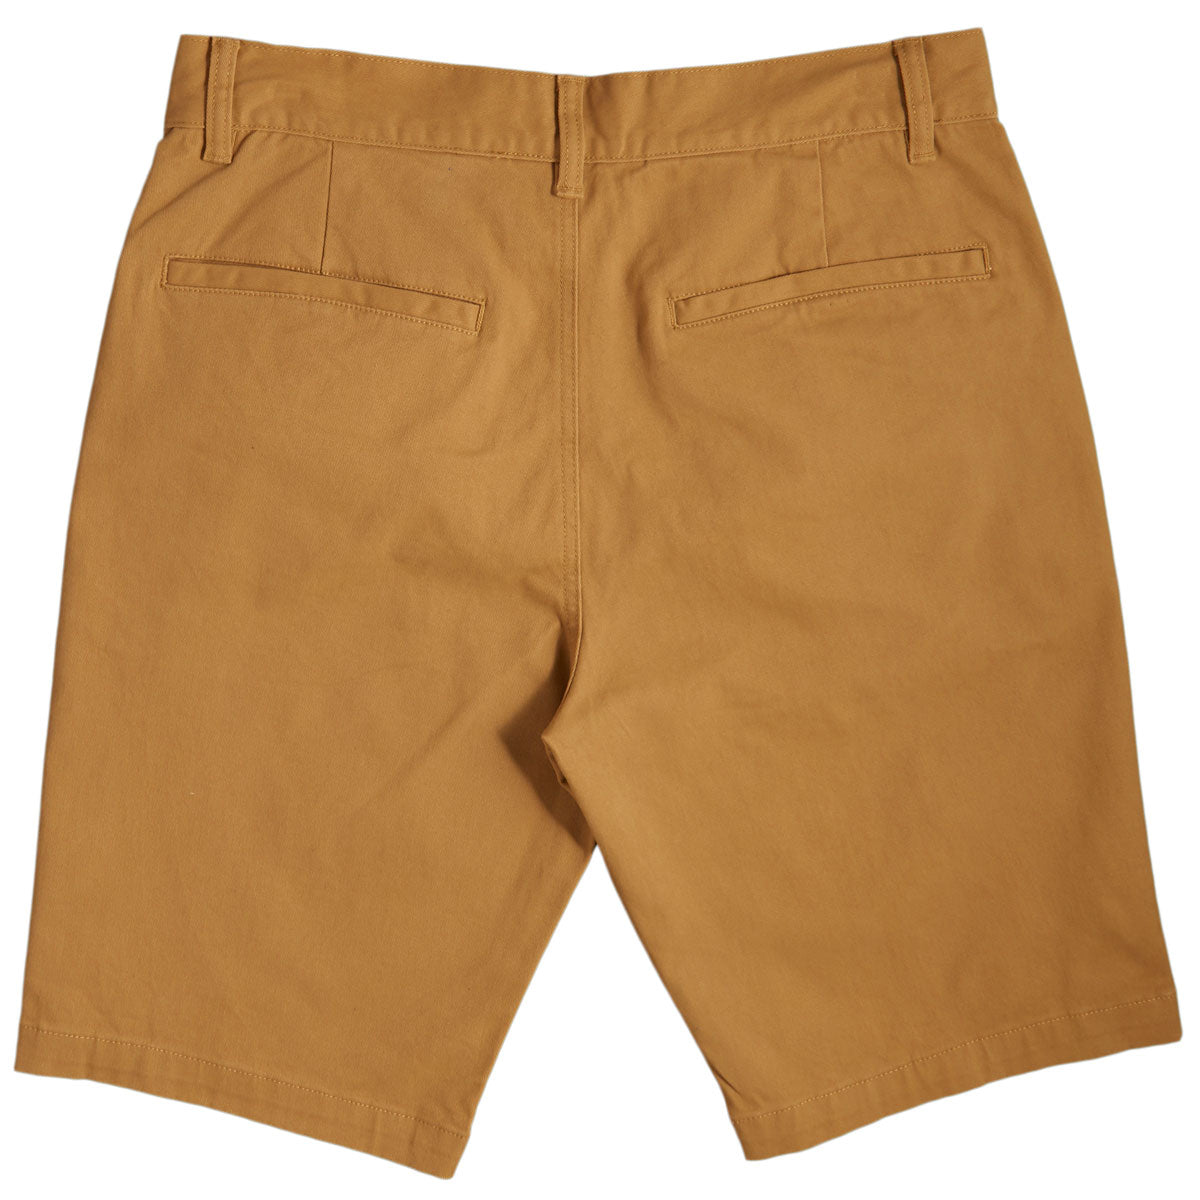 CCS Standard Plus Chino Shorts - Khaki image 6